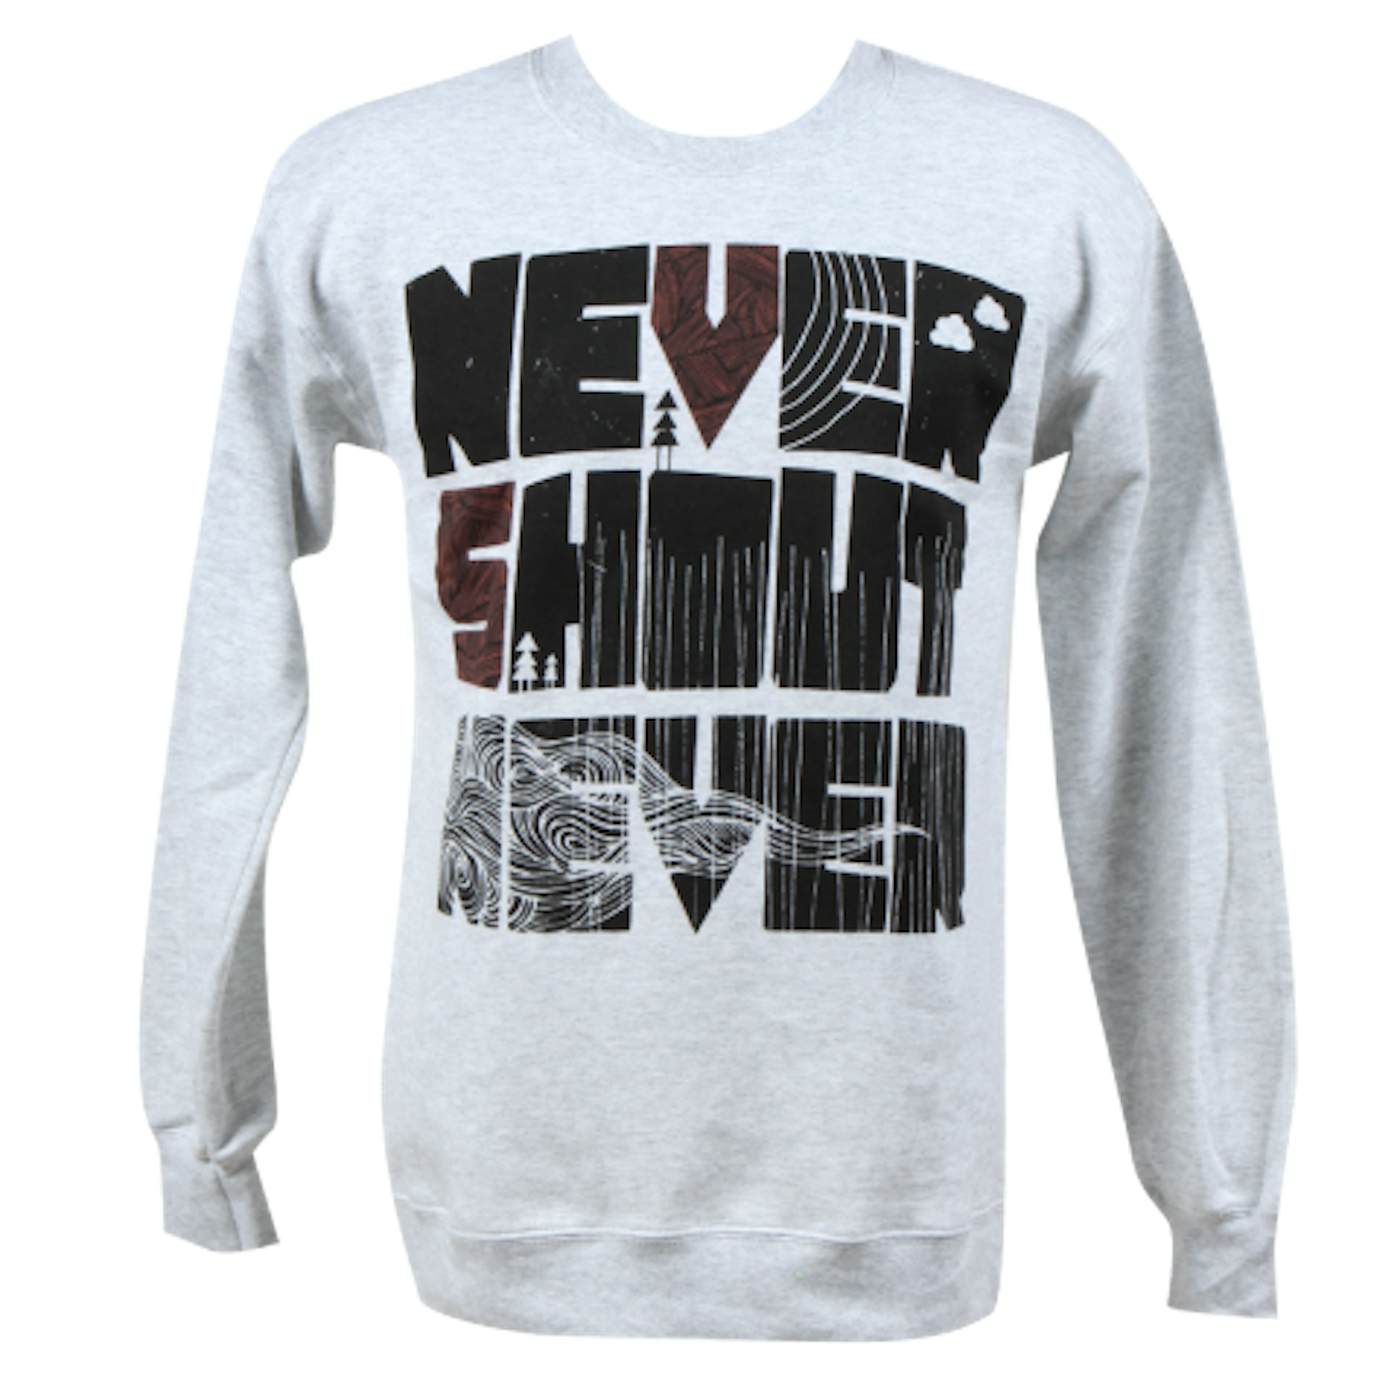 Never Shout Never Elements Sweatshirt